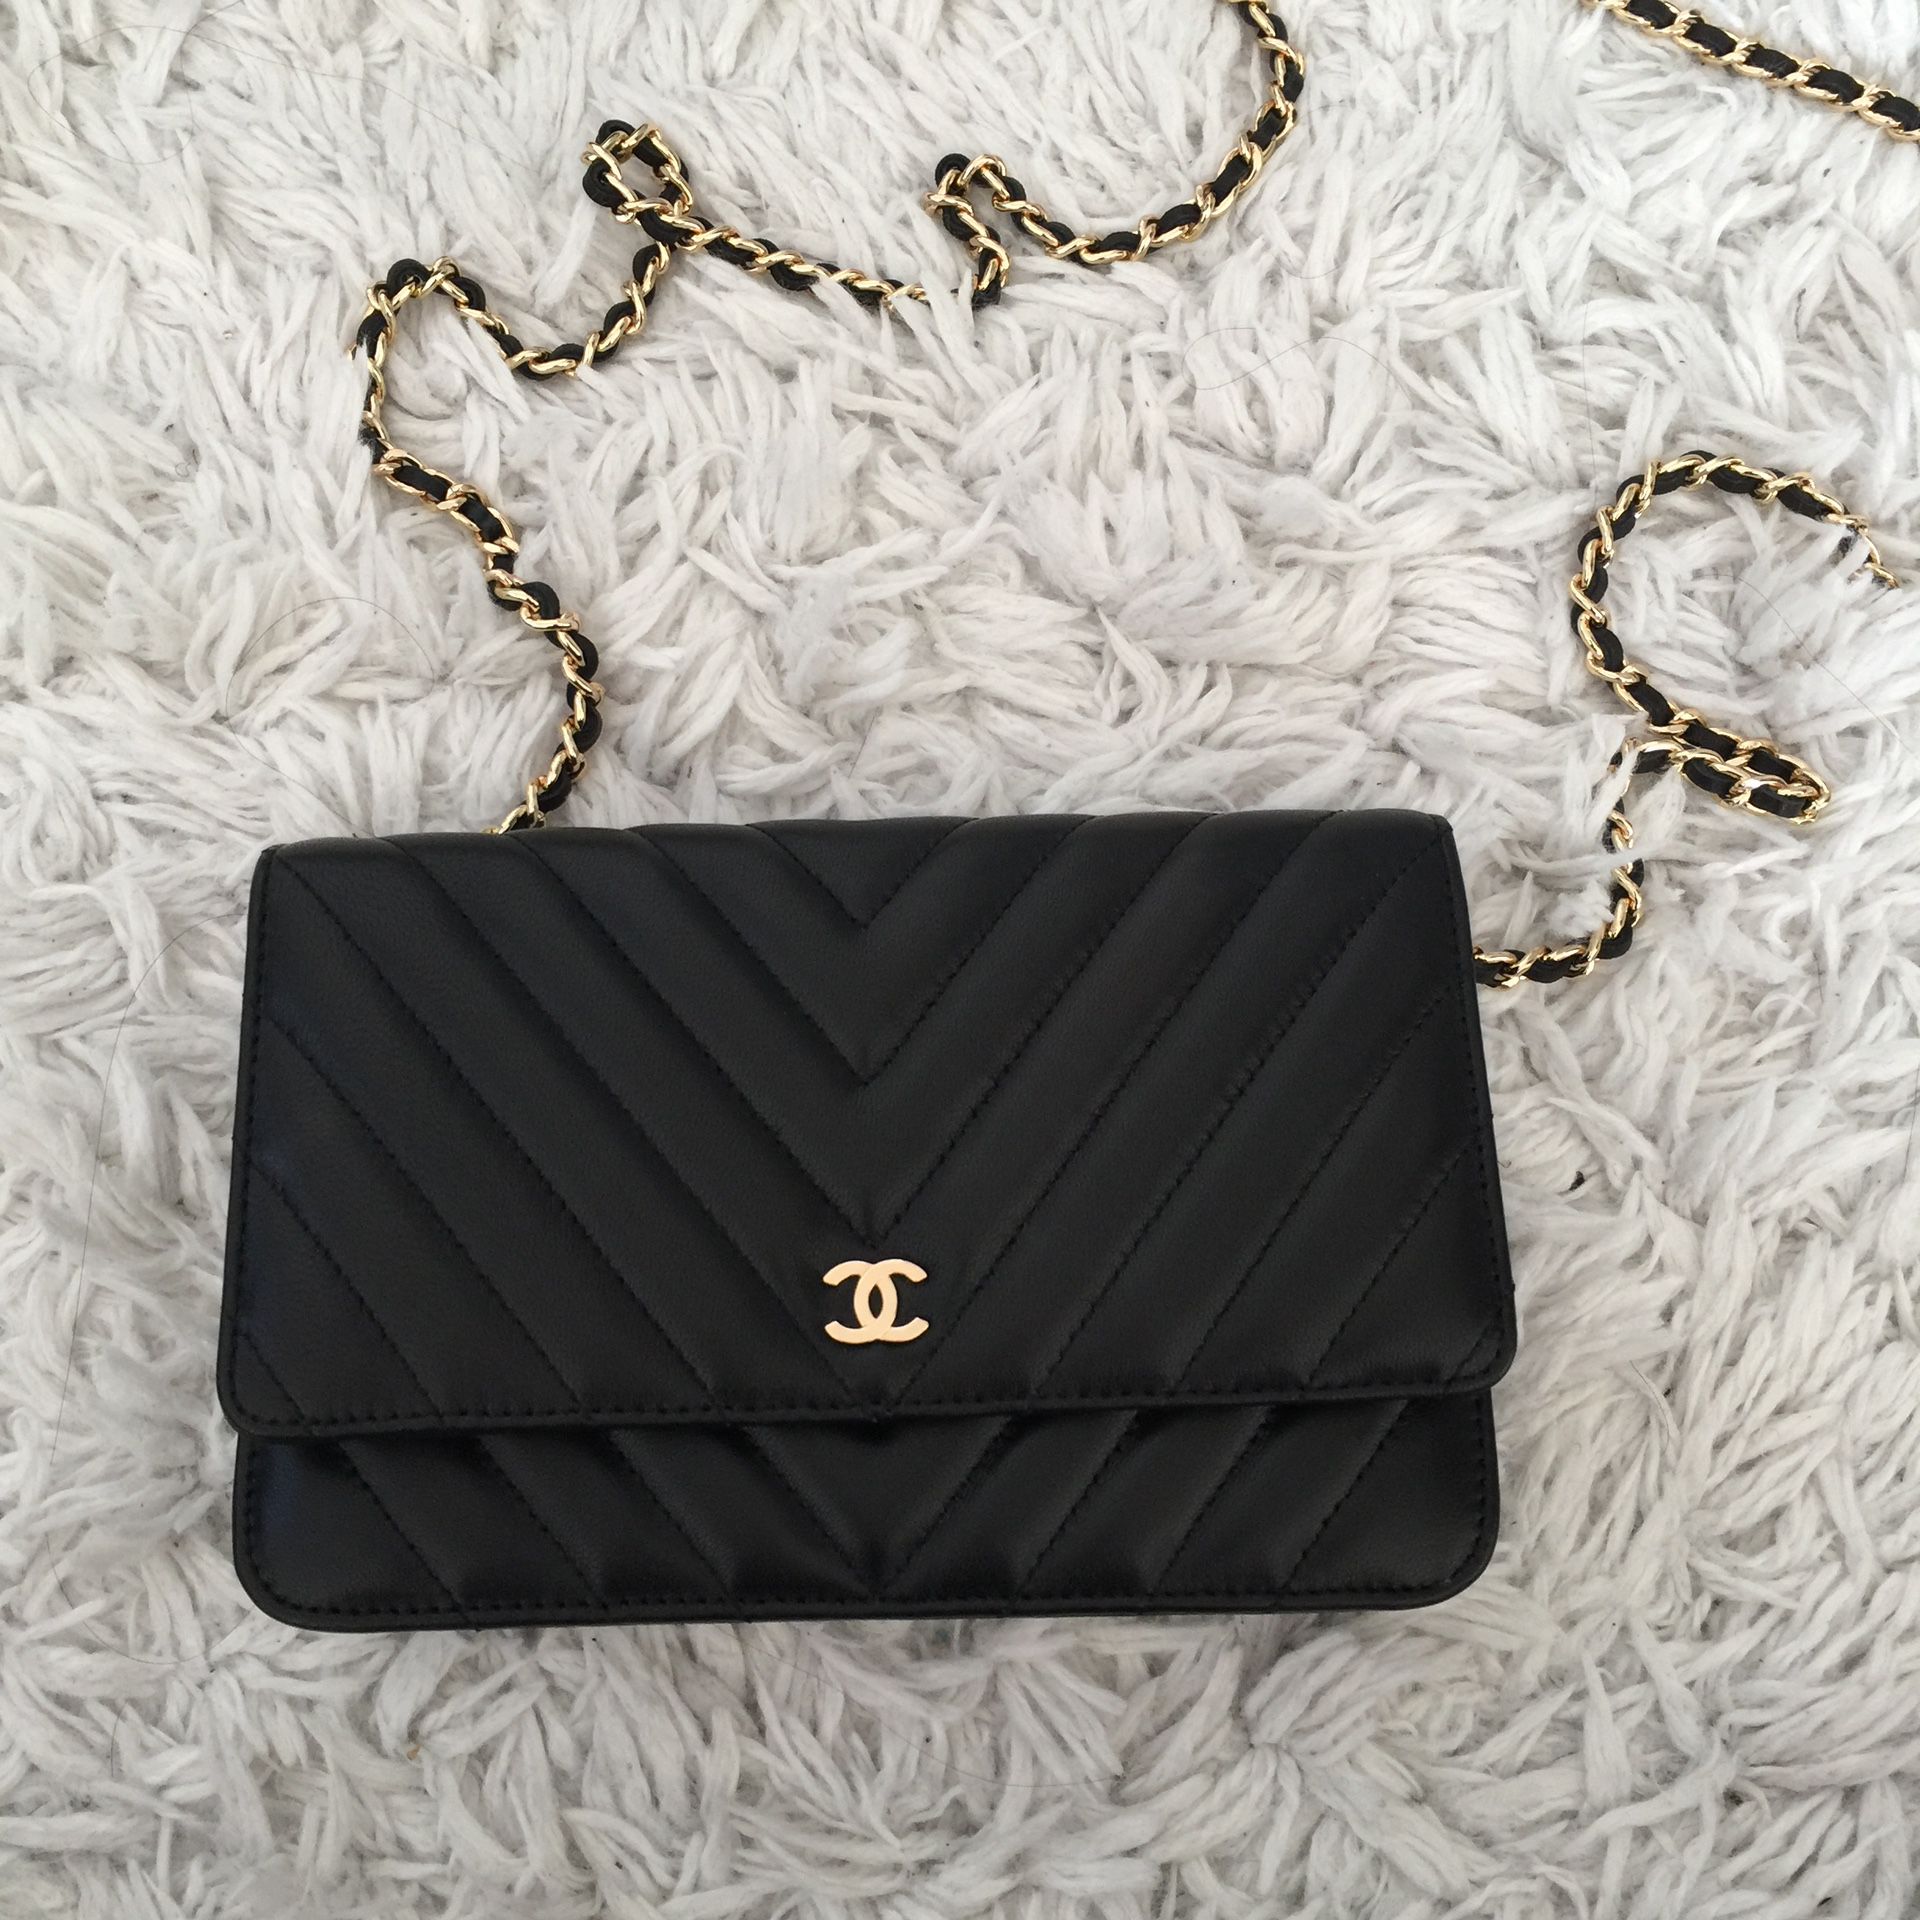 Authentic Chanel black leather WOC crossbody bag